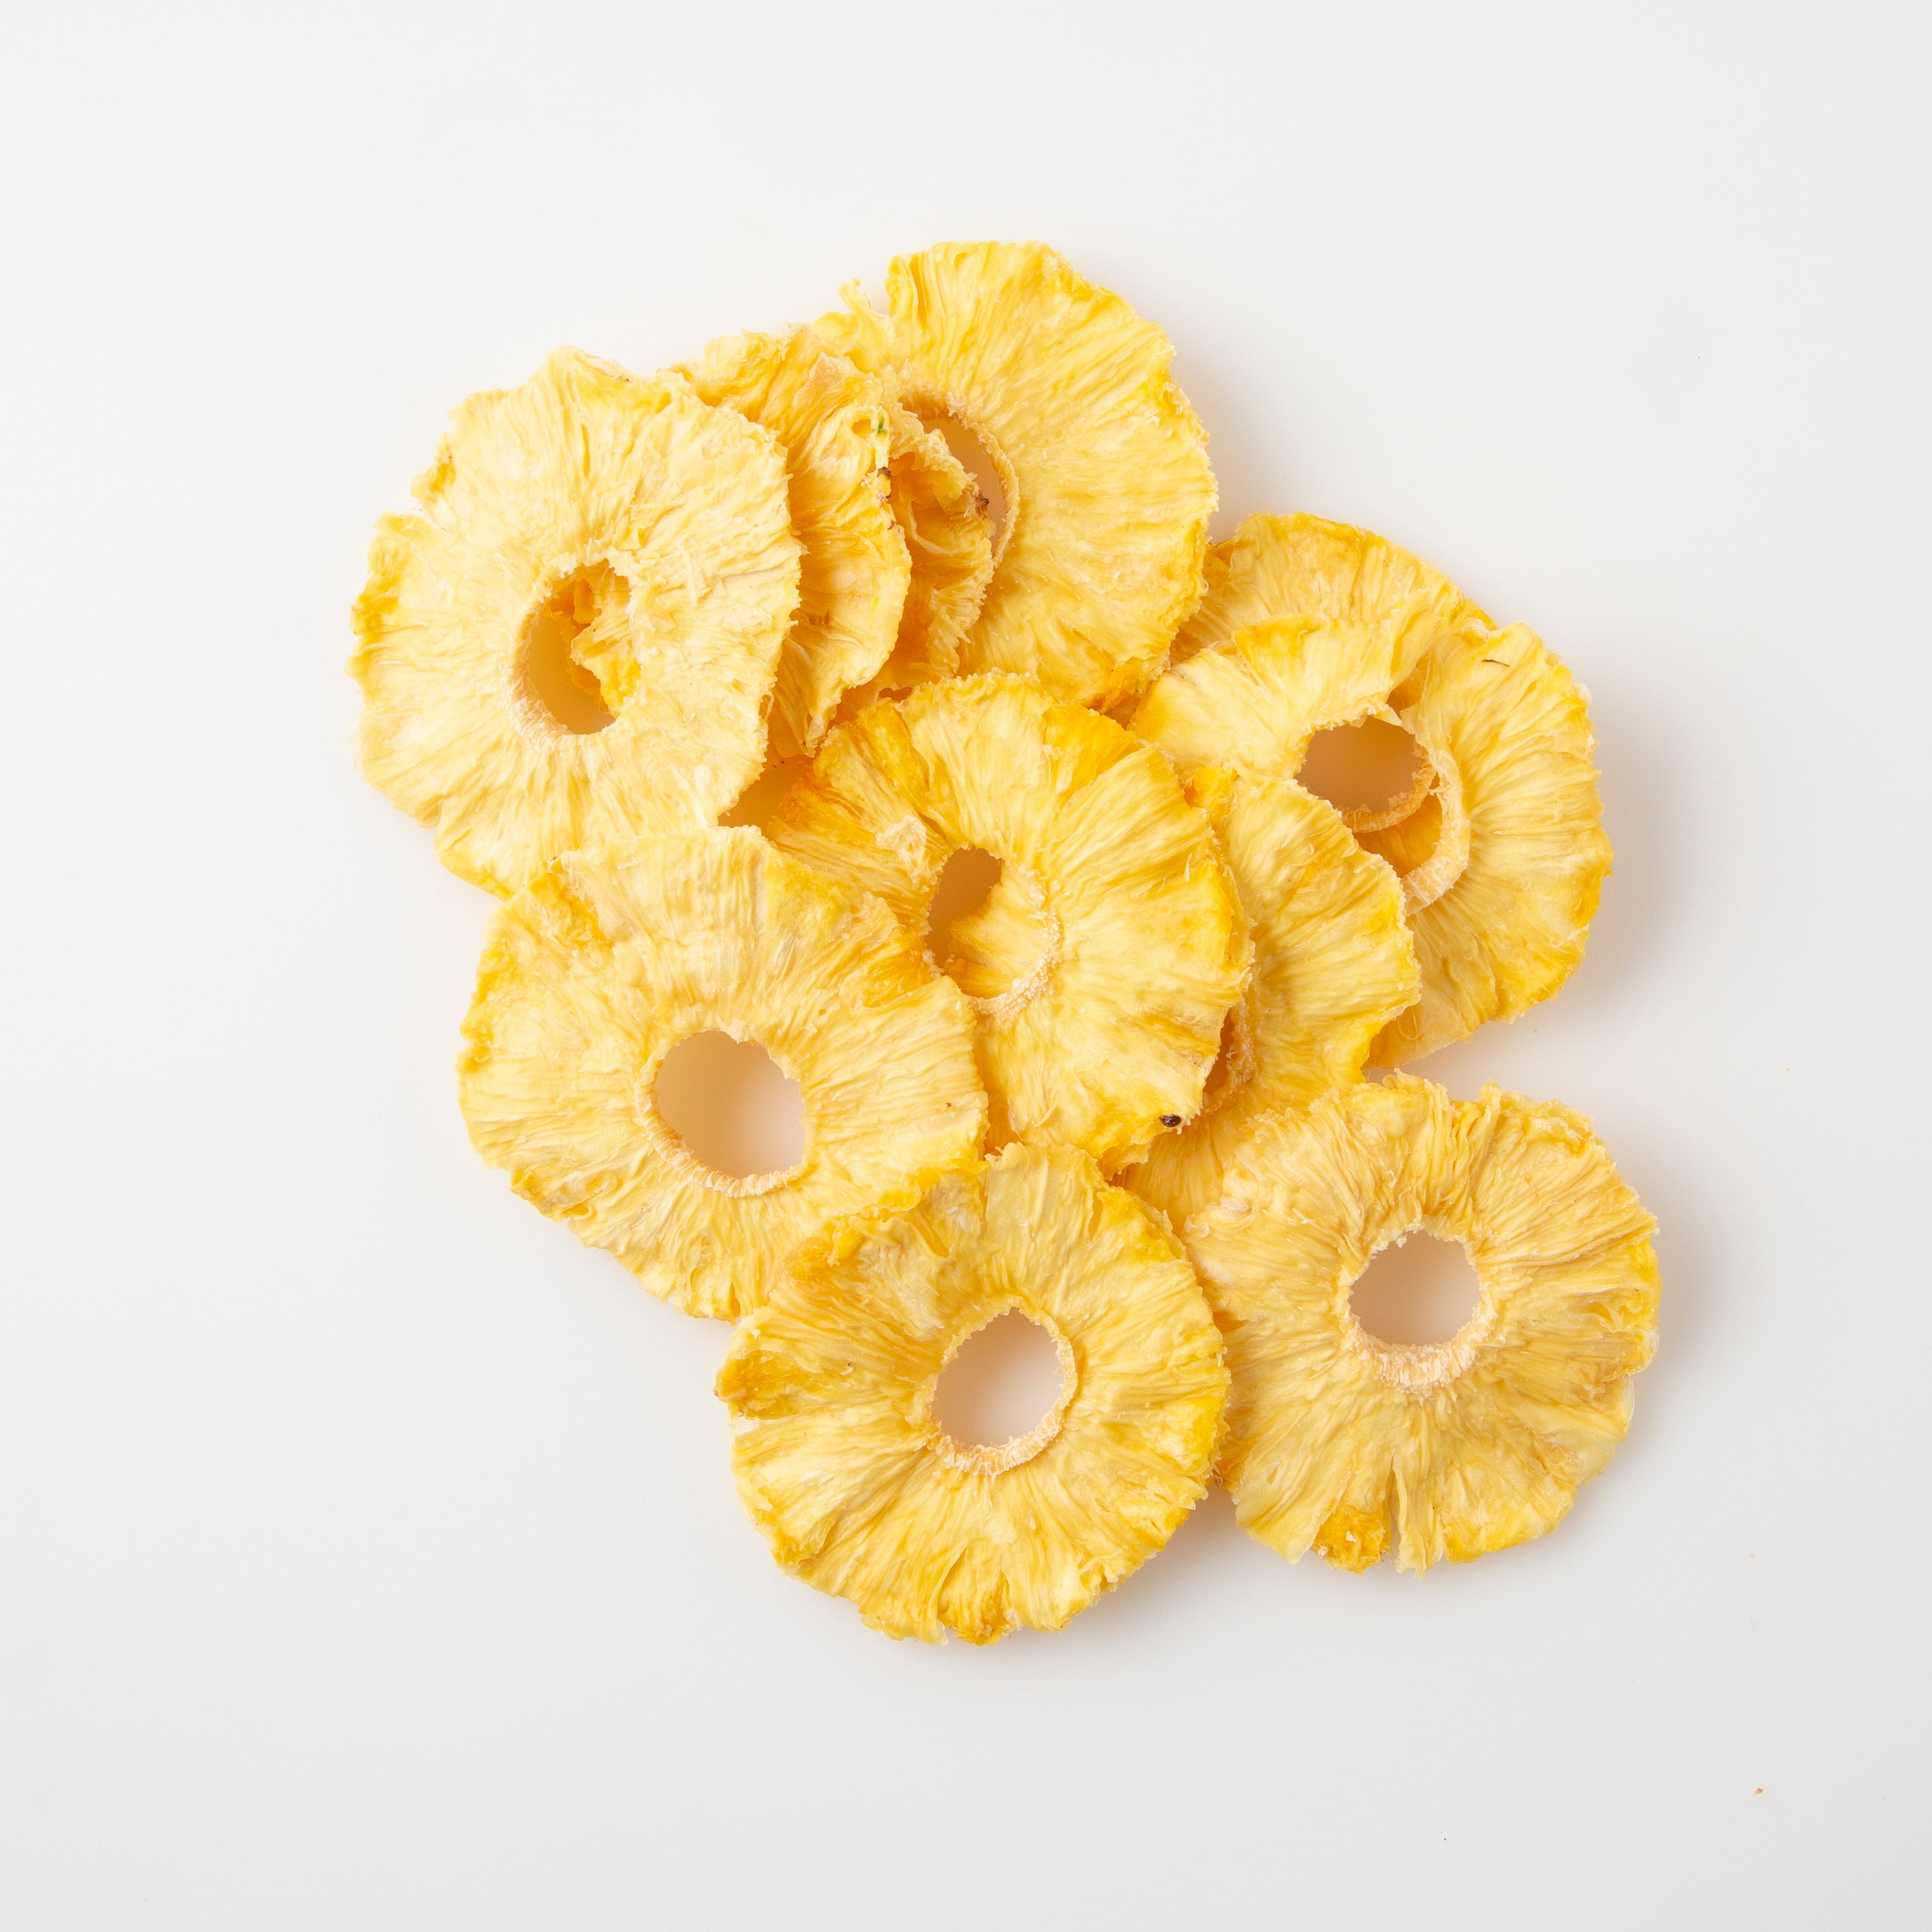 Dried Australian Pineapple (Dried Fruits) Image 3 - Naked Foods